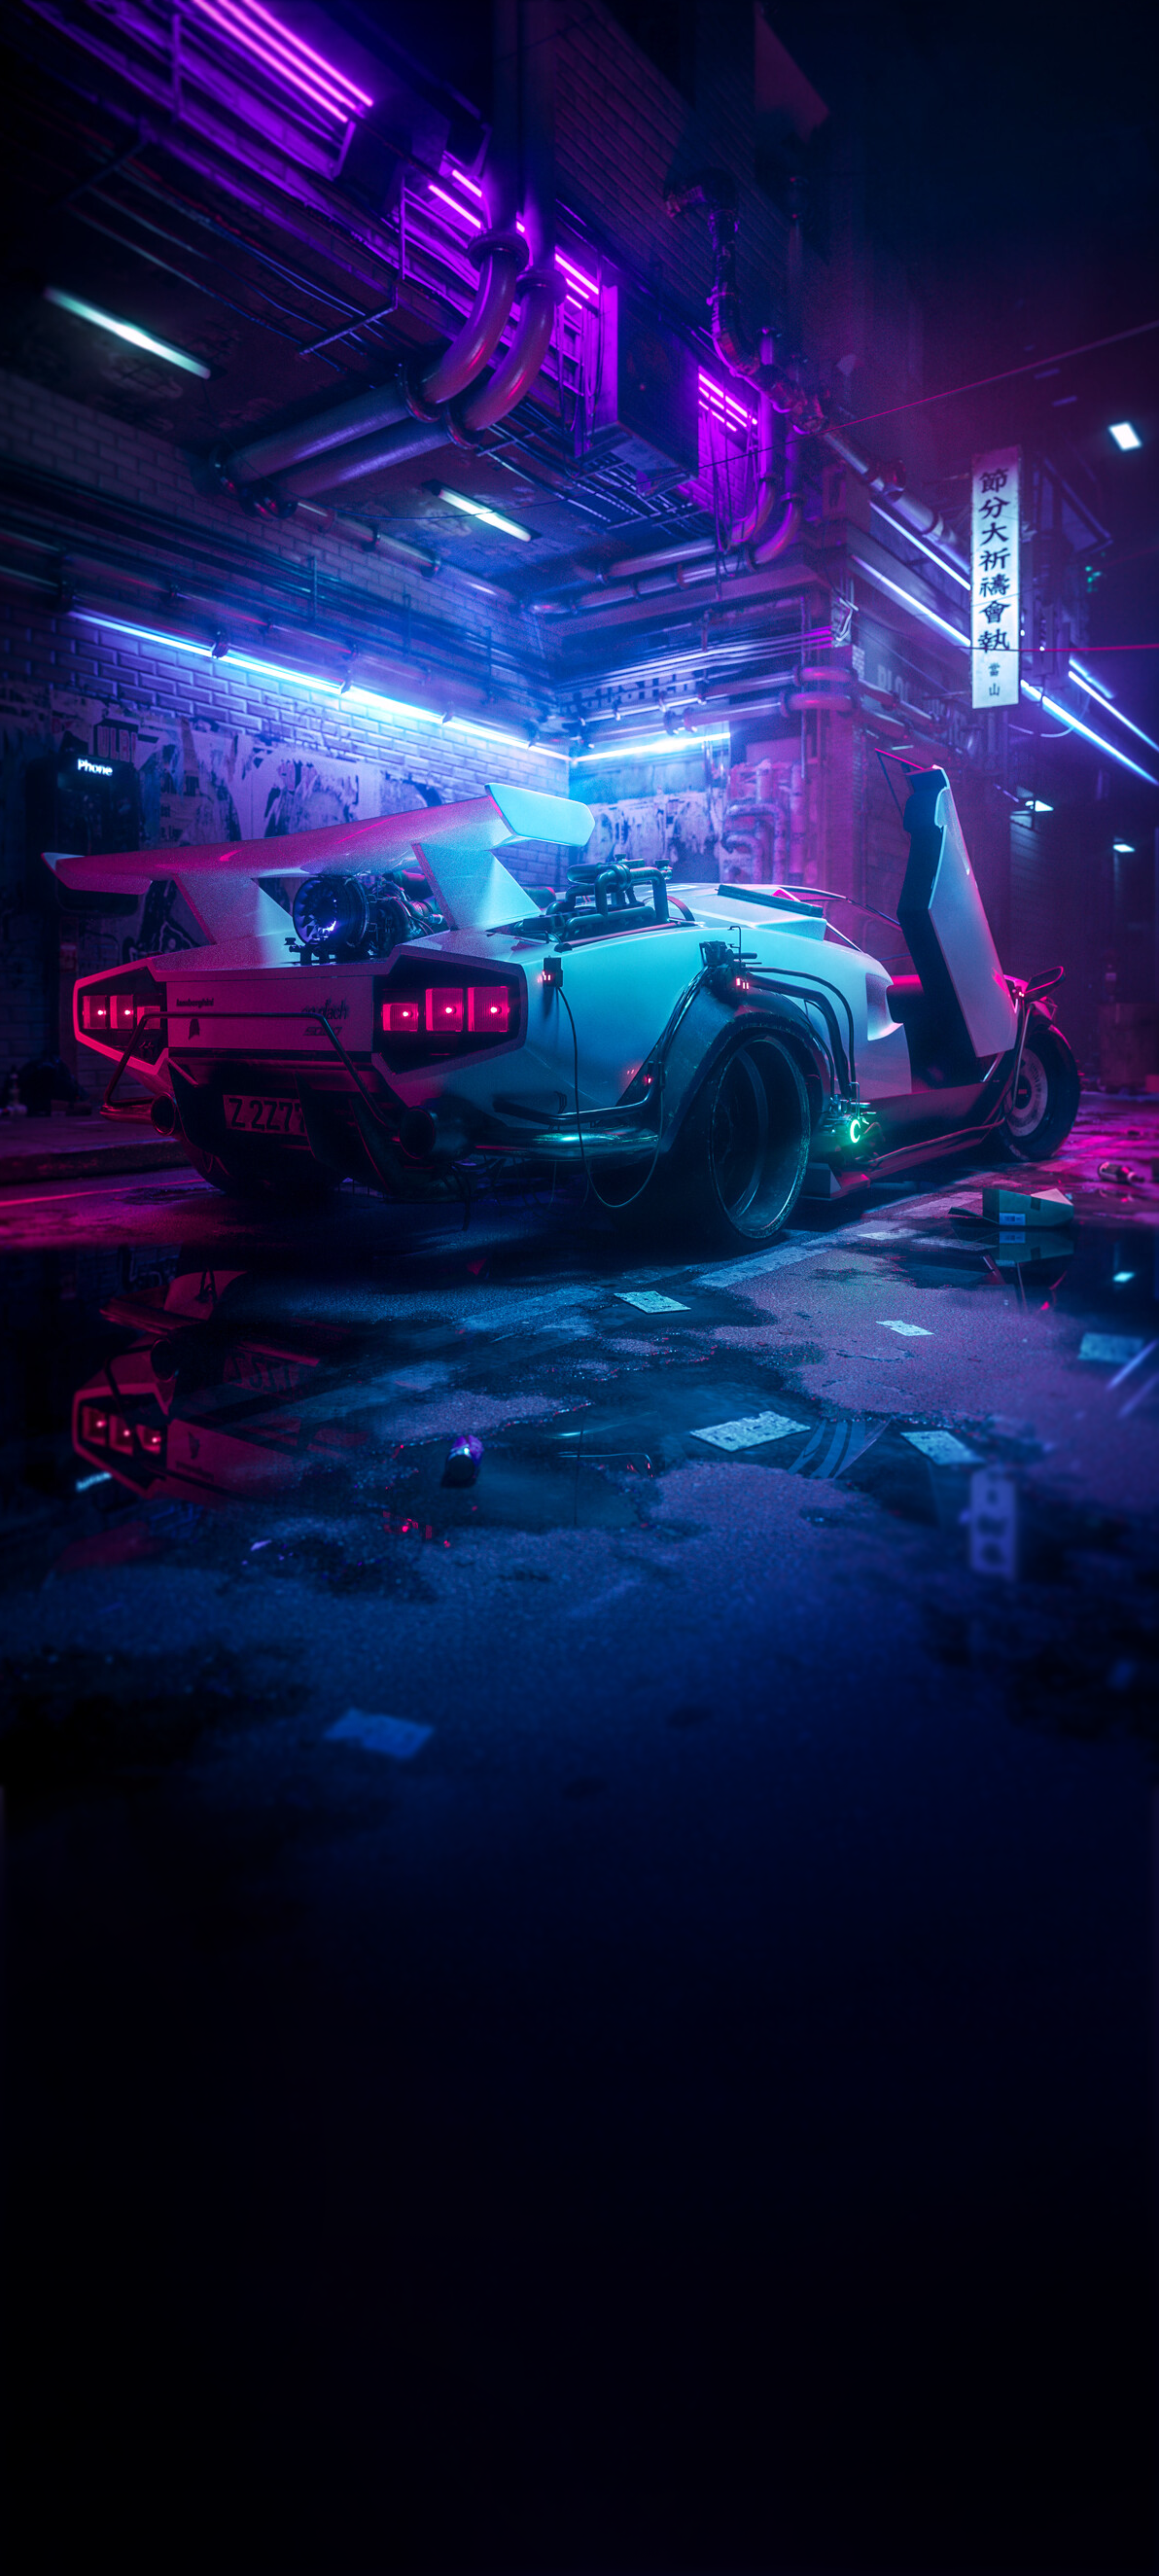 iPhone wallpaper HD - Cyberpunk Car